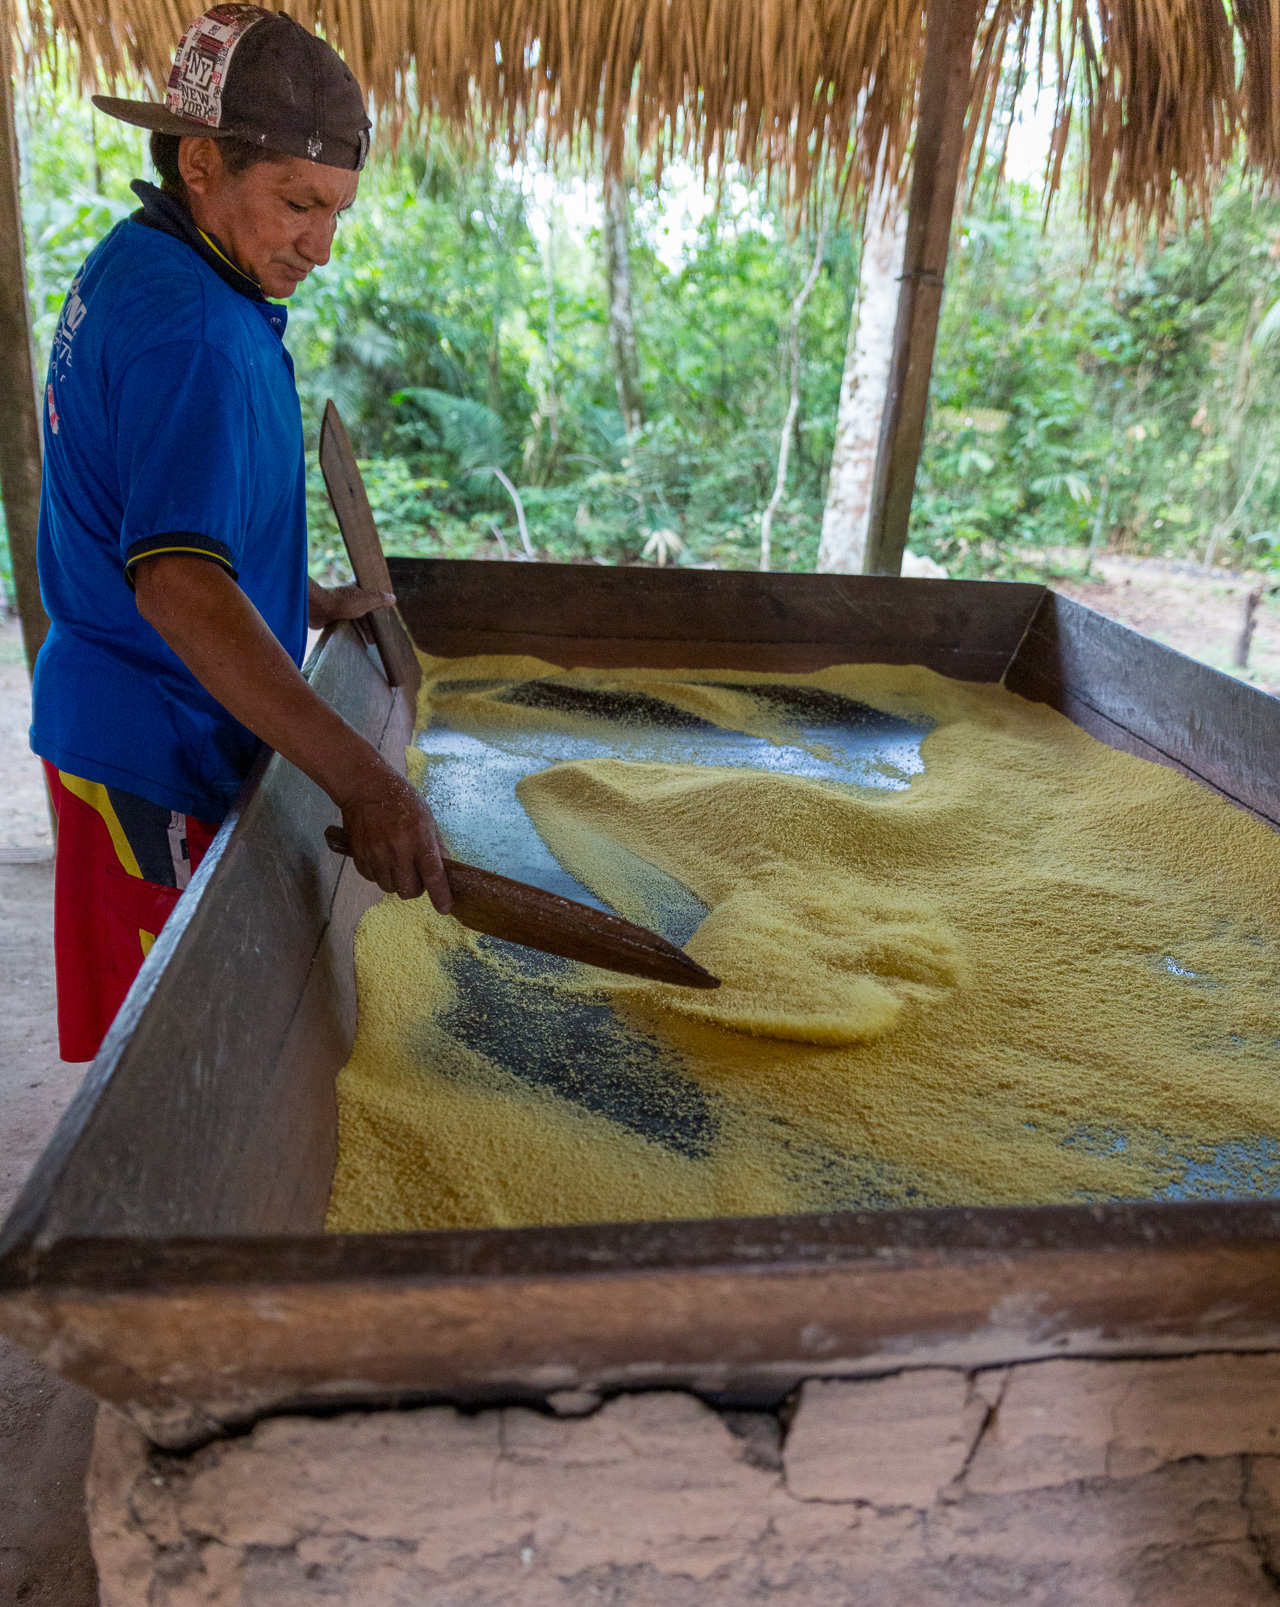 Préparation de la farine de manioc.